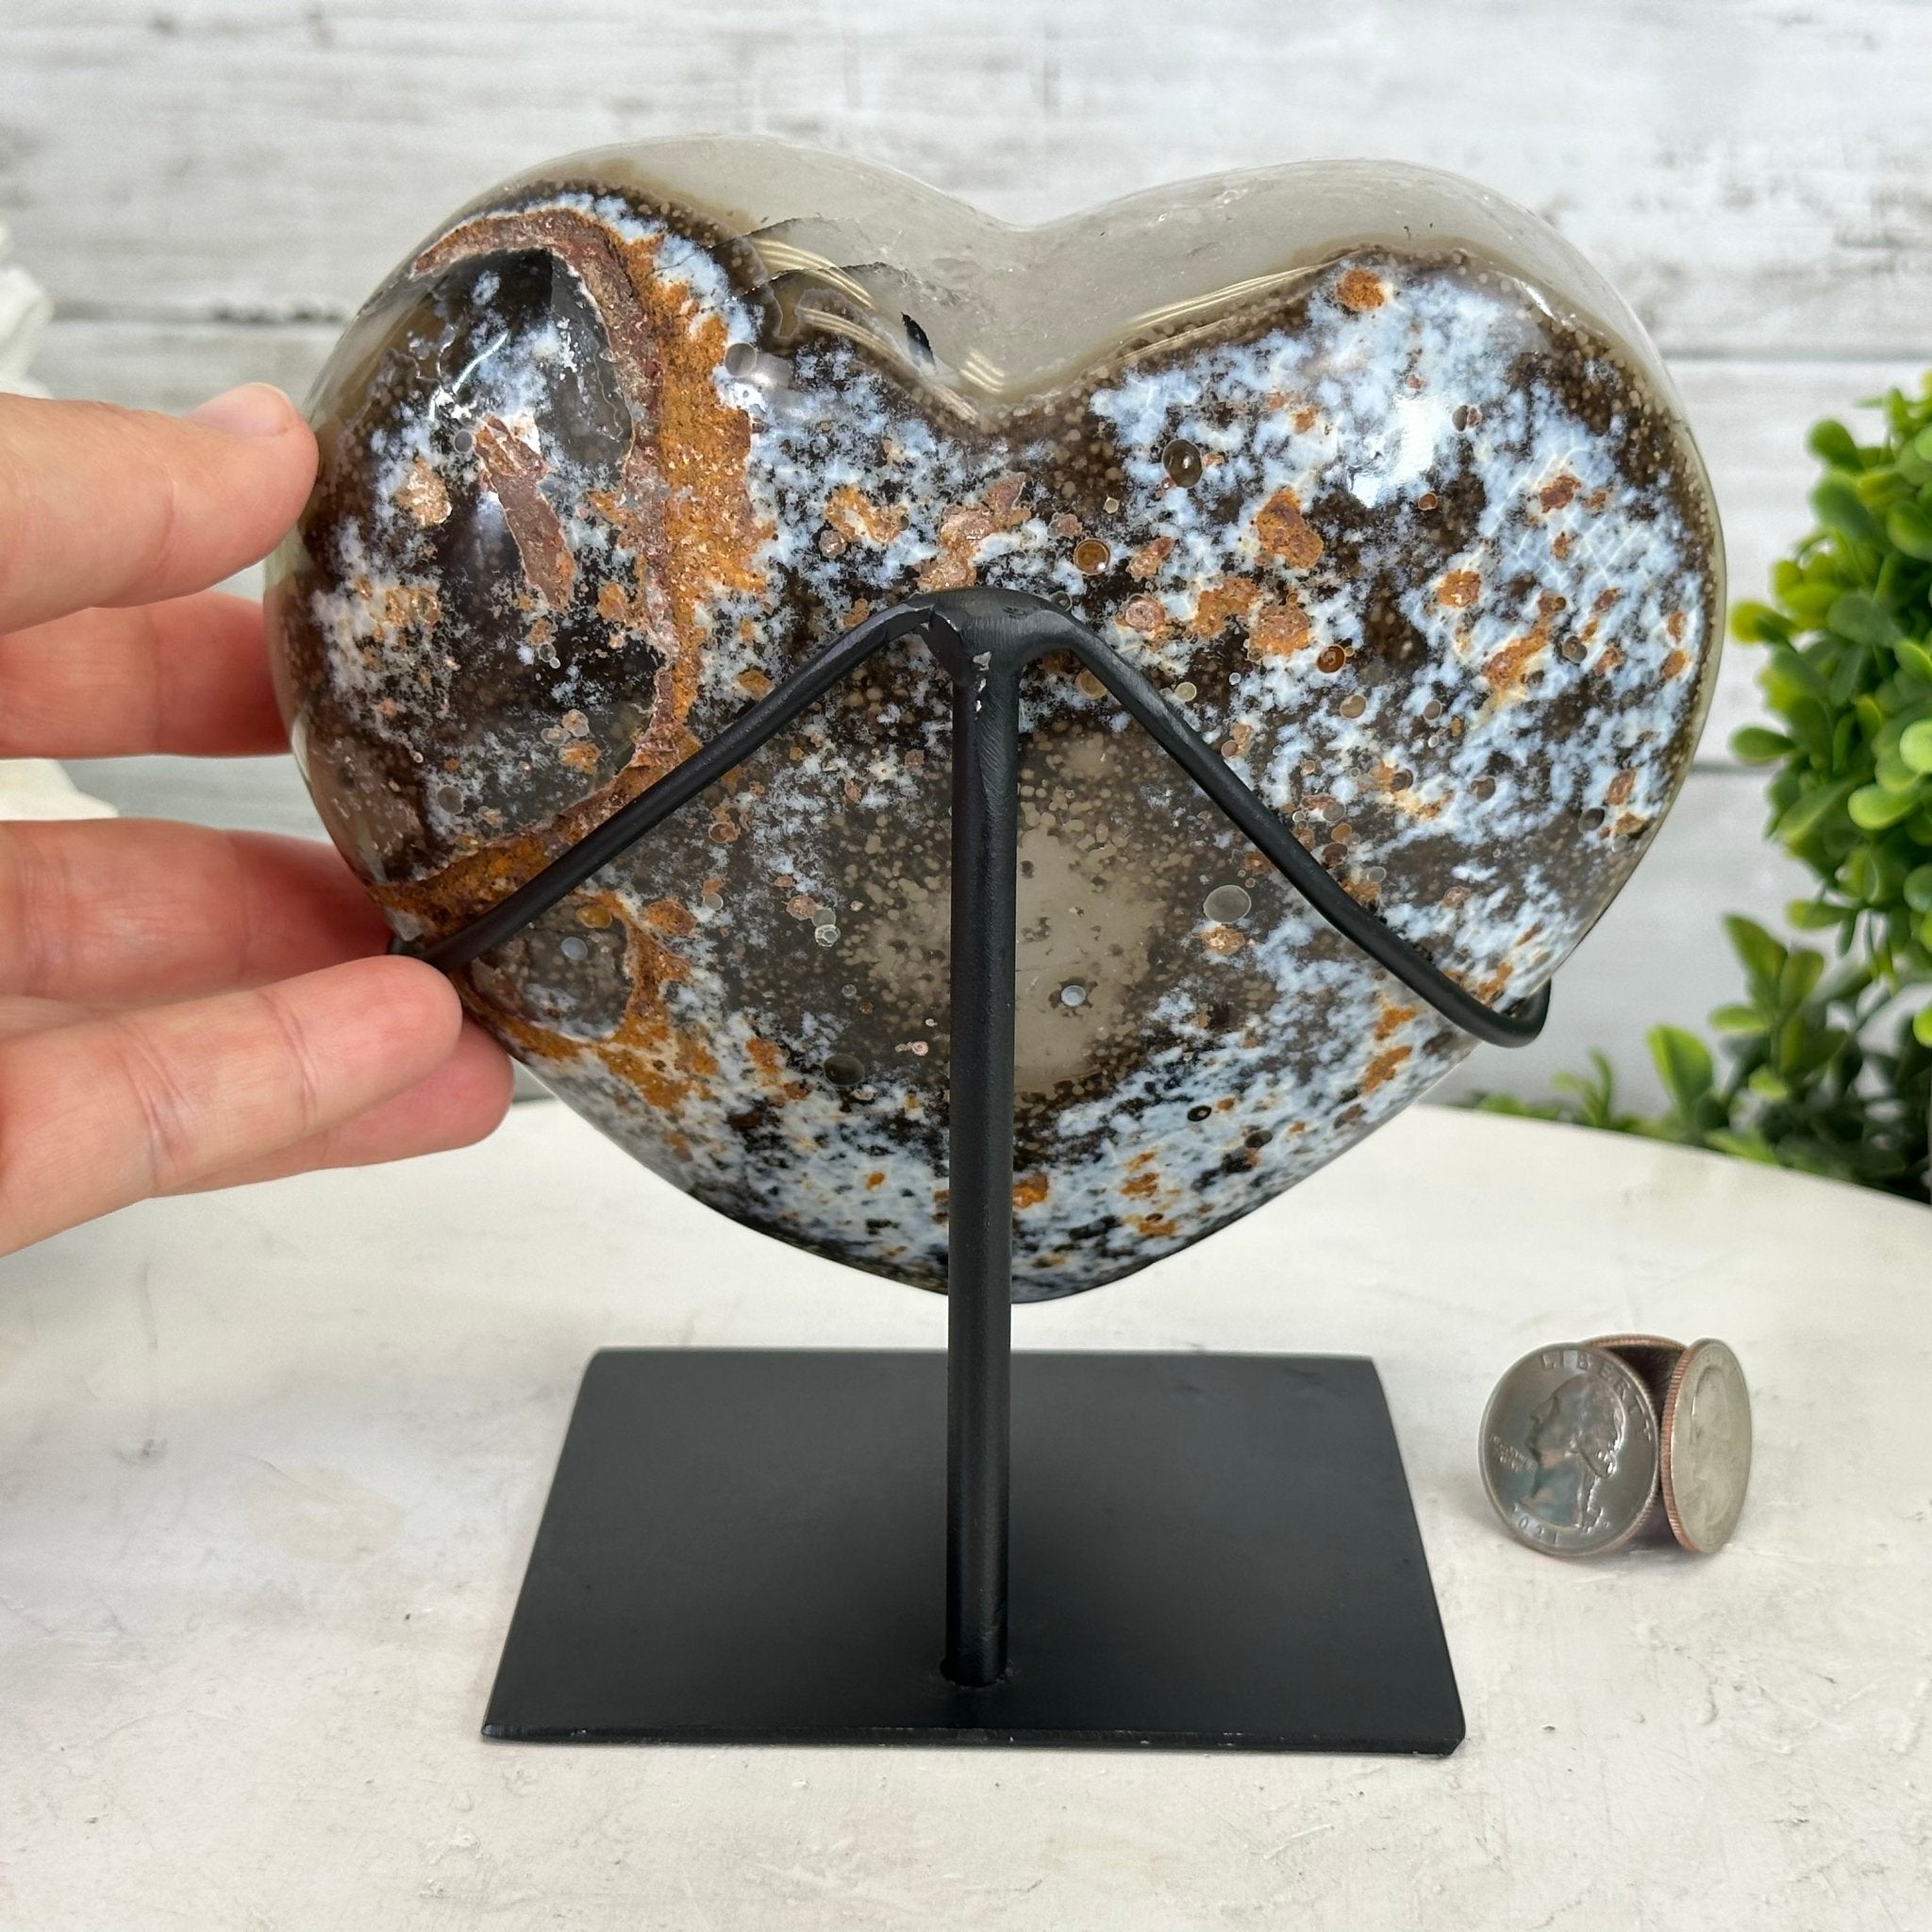 Polished Agate Heart Geode on a Metal Stand, 4.7 lbs & 6.5" Tall, Model #5468-0066 by Brazil Gems - Brazil GemsBrazil GemsPolished Agate Heart Geode on a Metal Stand, 4.7 lbs & 6.5" Tall, Model #5468-0066 by Brazil GemsHearts5468-0066